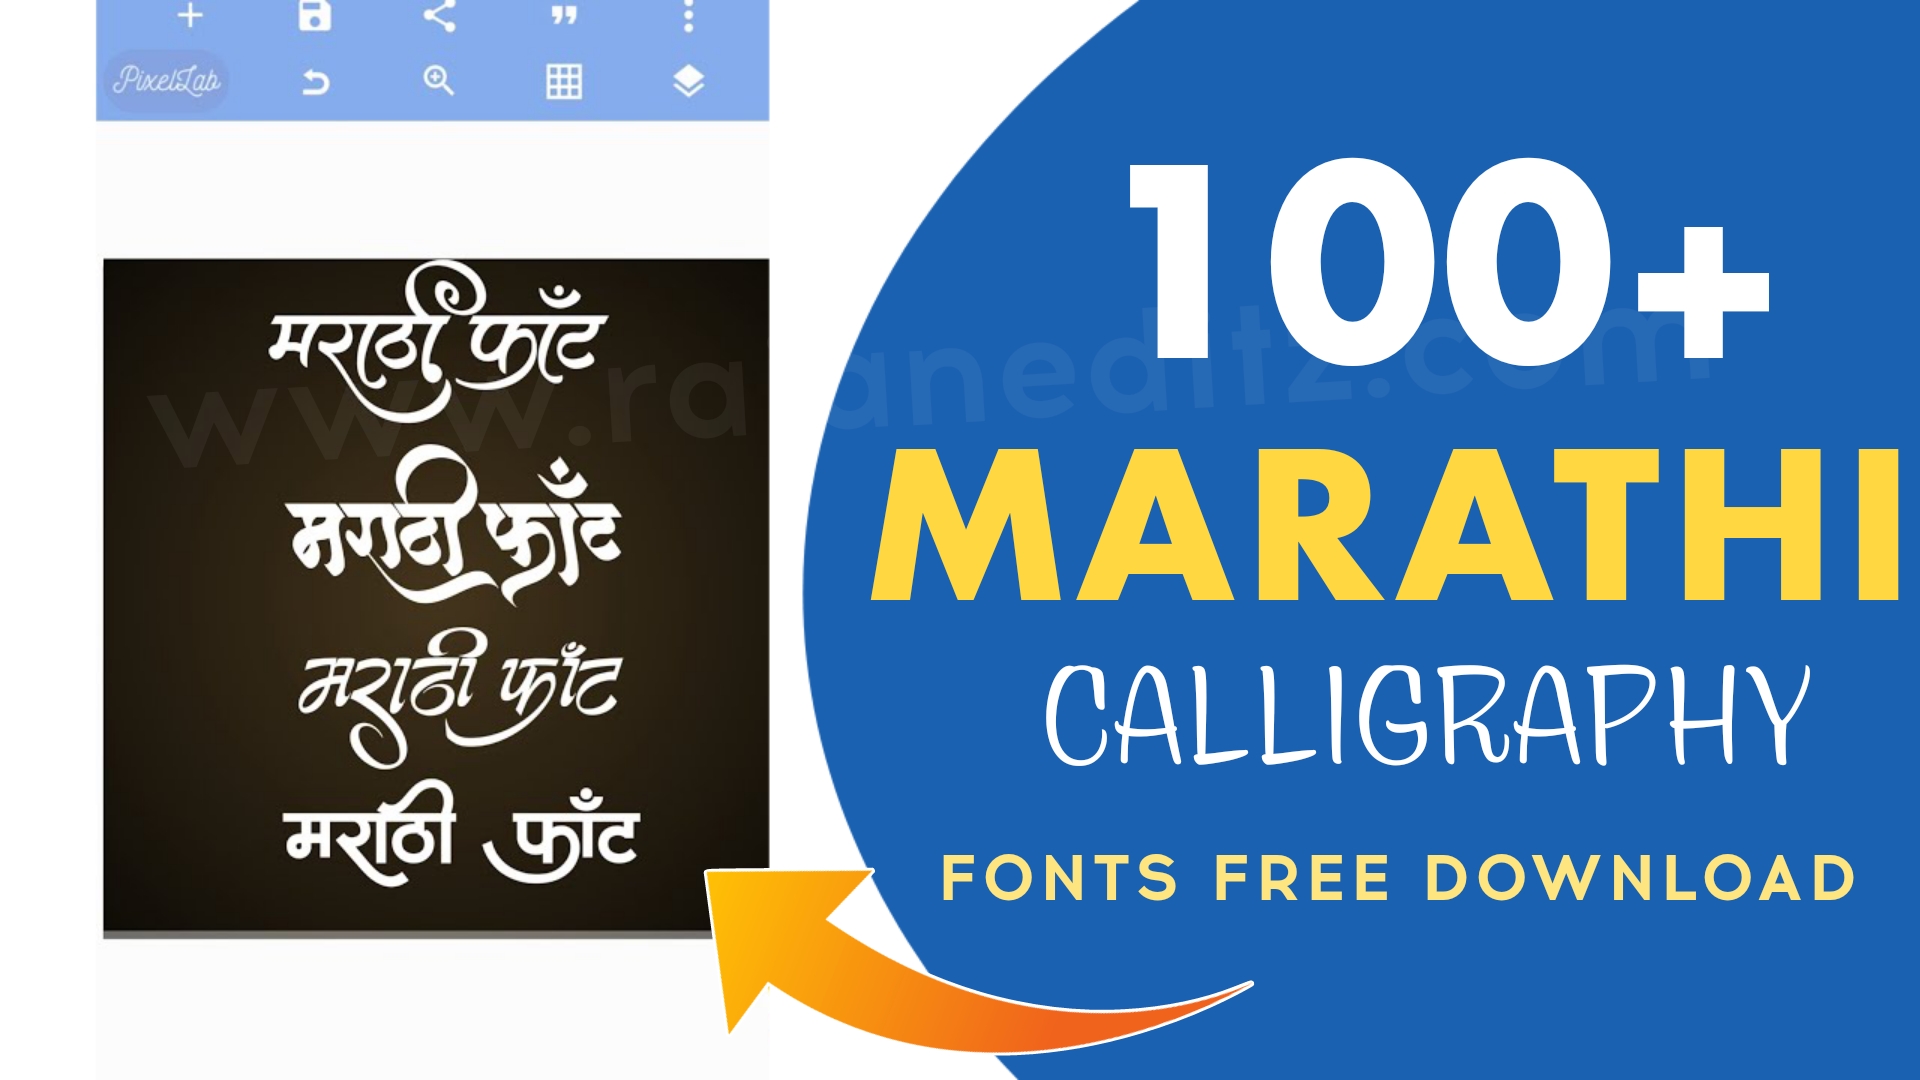 Marathi calligraphy fonts download